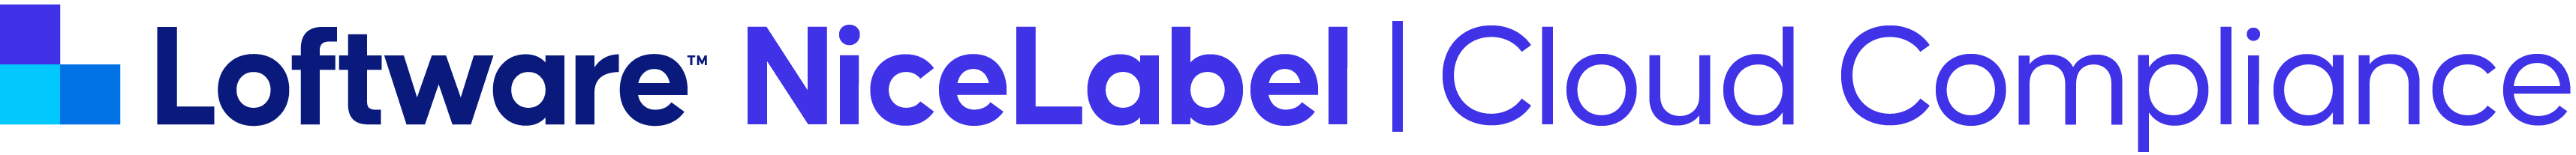 logo nicelabel cloud compliance